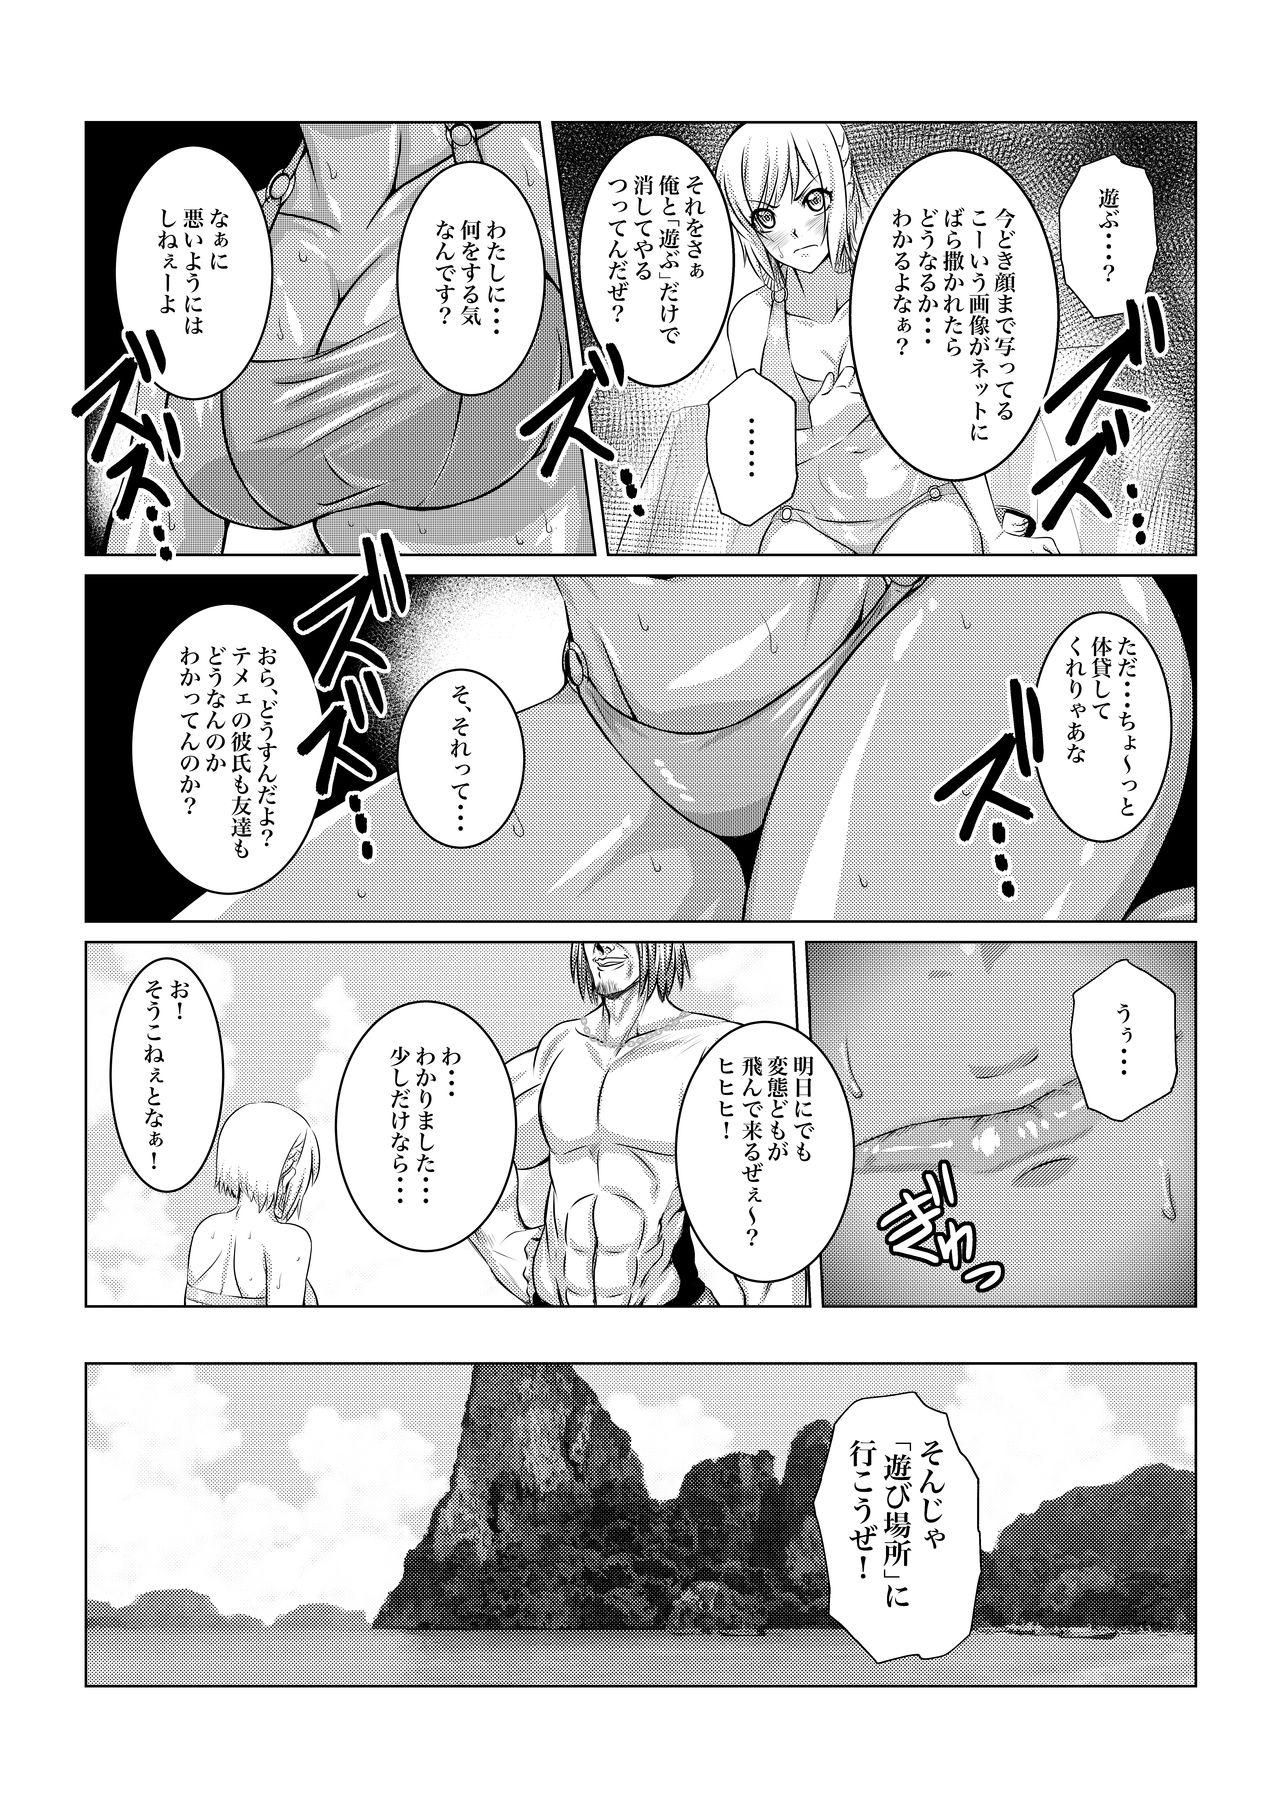 Perfect Teen Gekka Midarezaki - Tales of vesperia Gonzo - Page 8